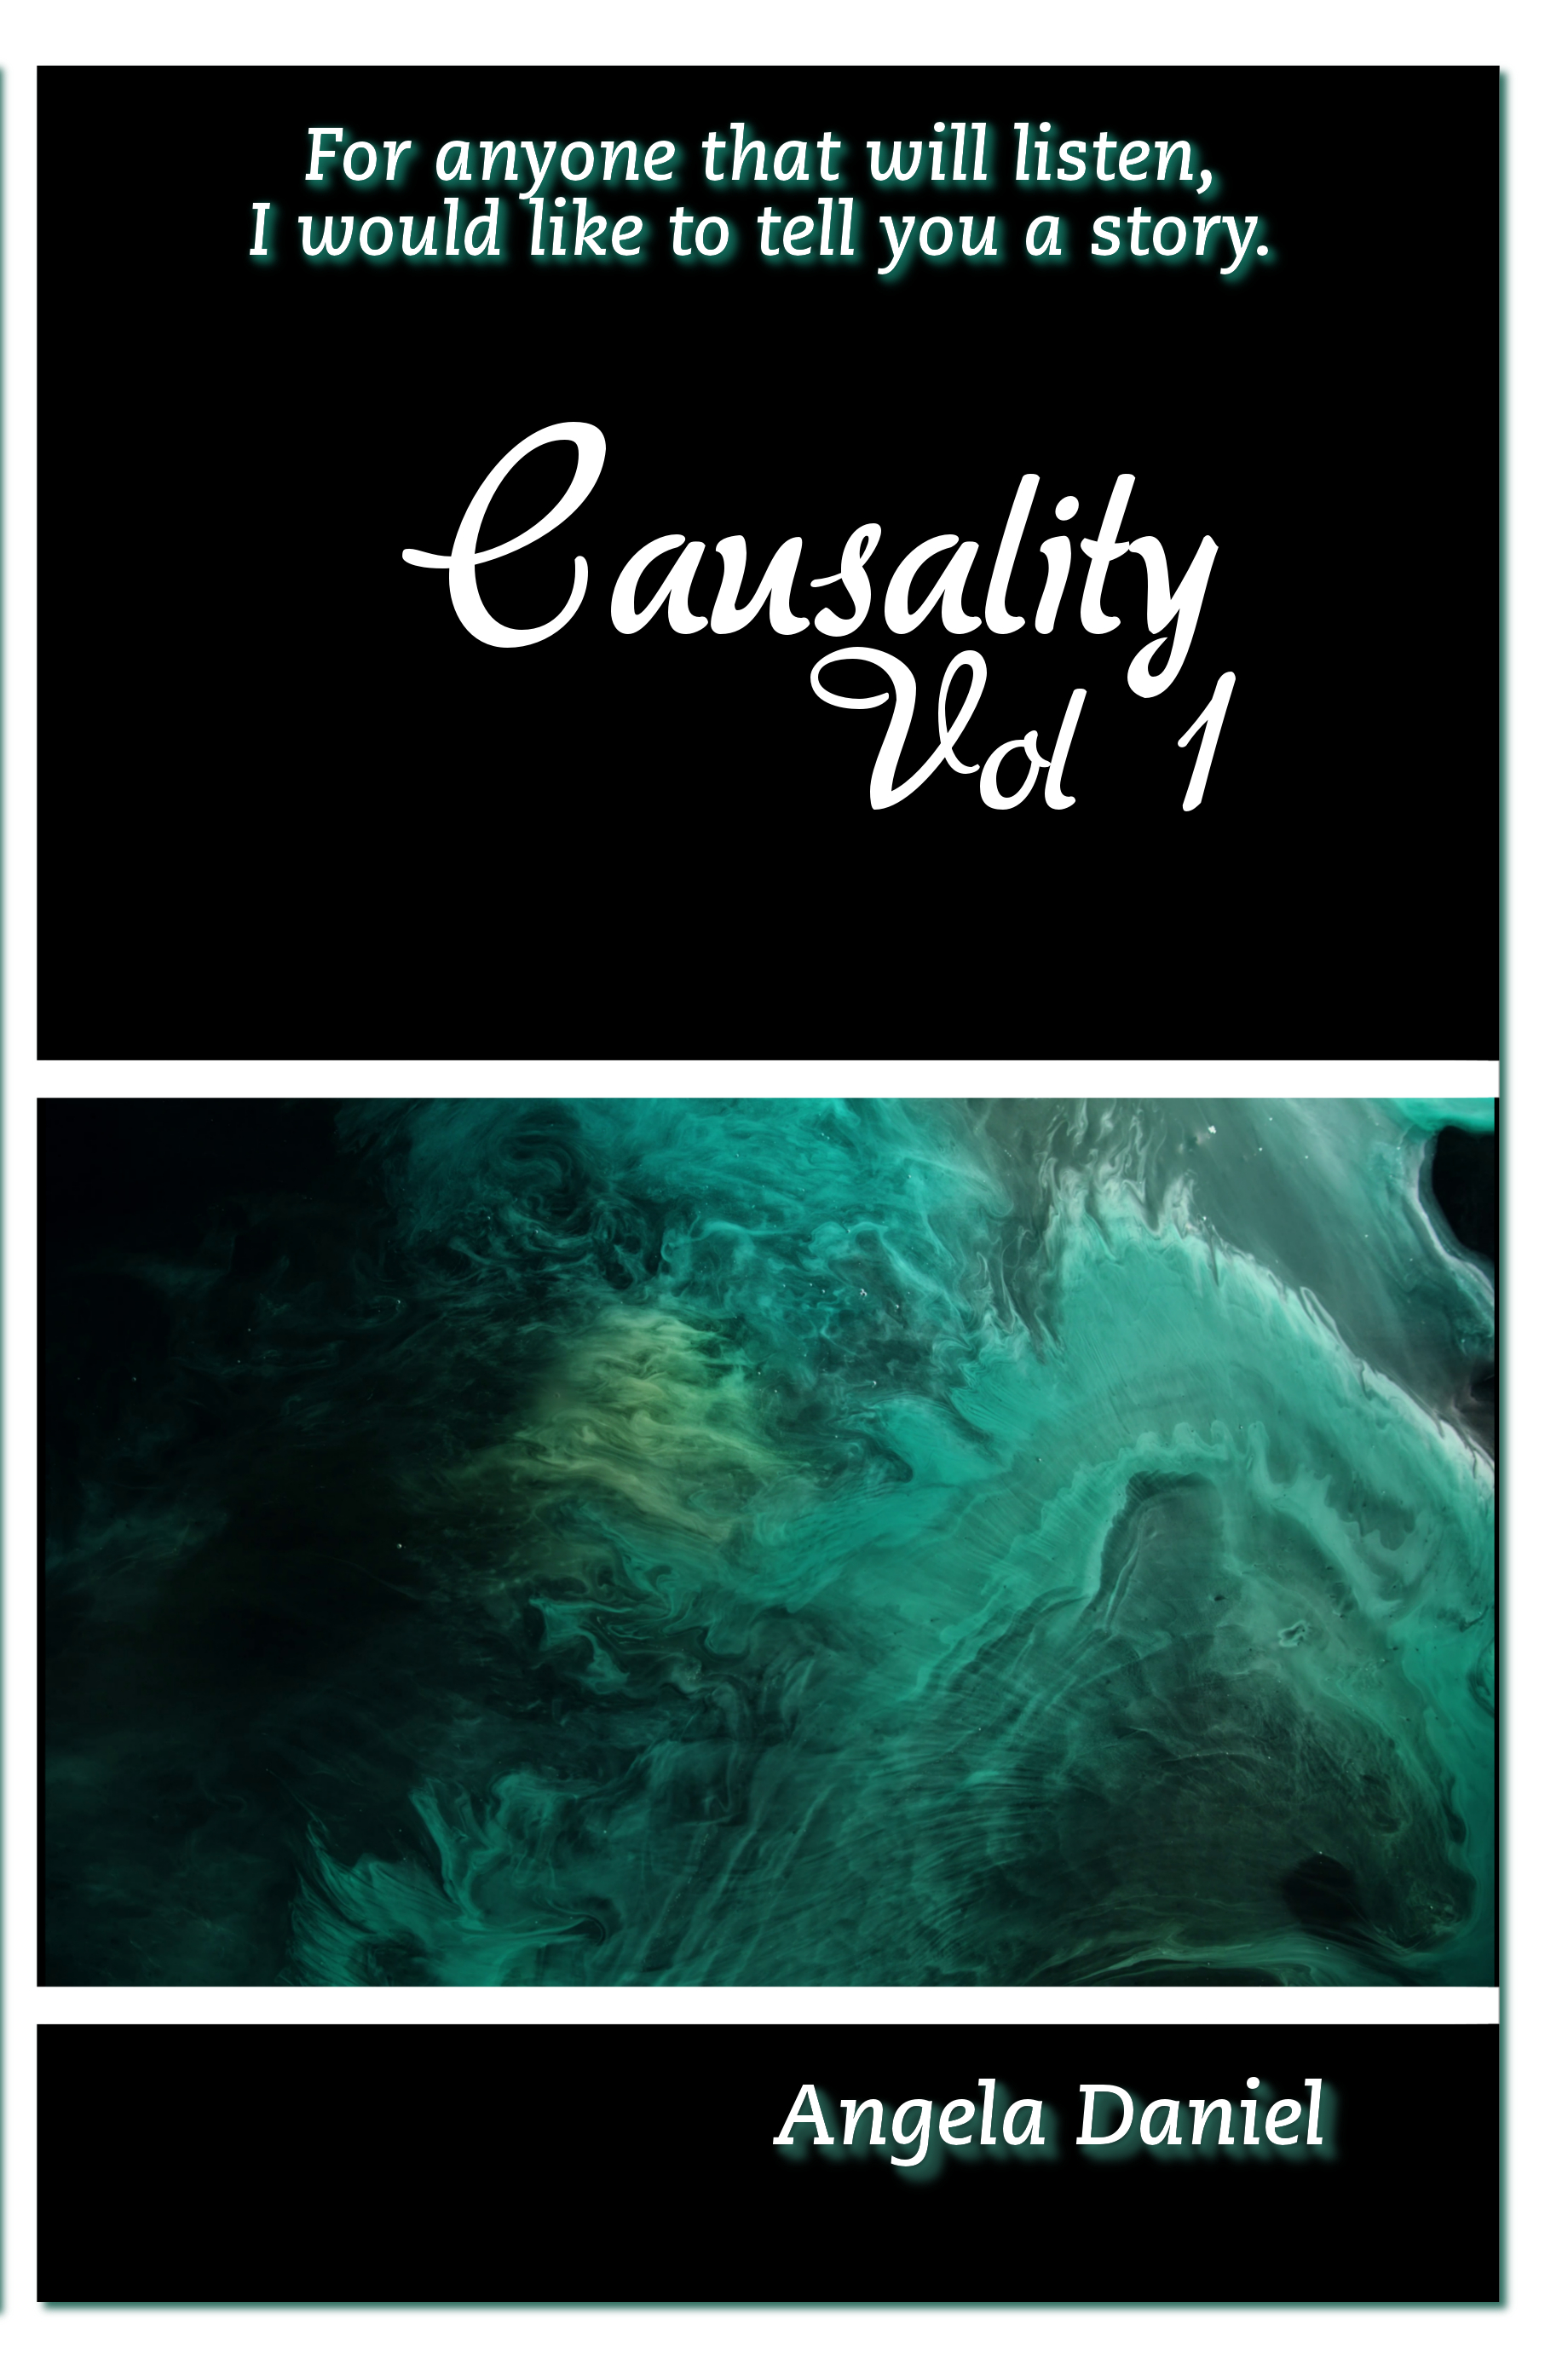 causality